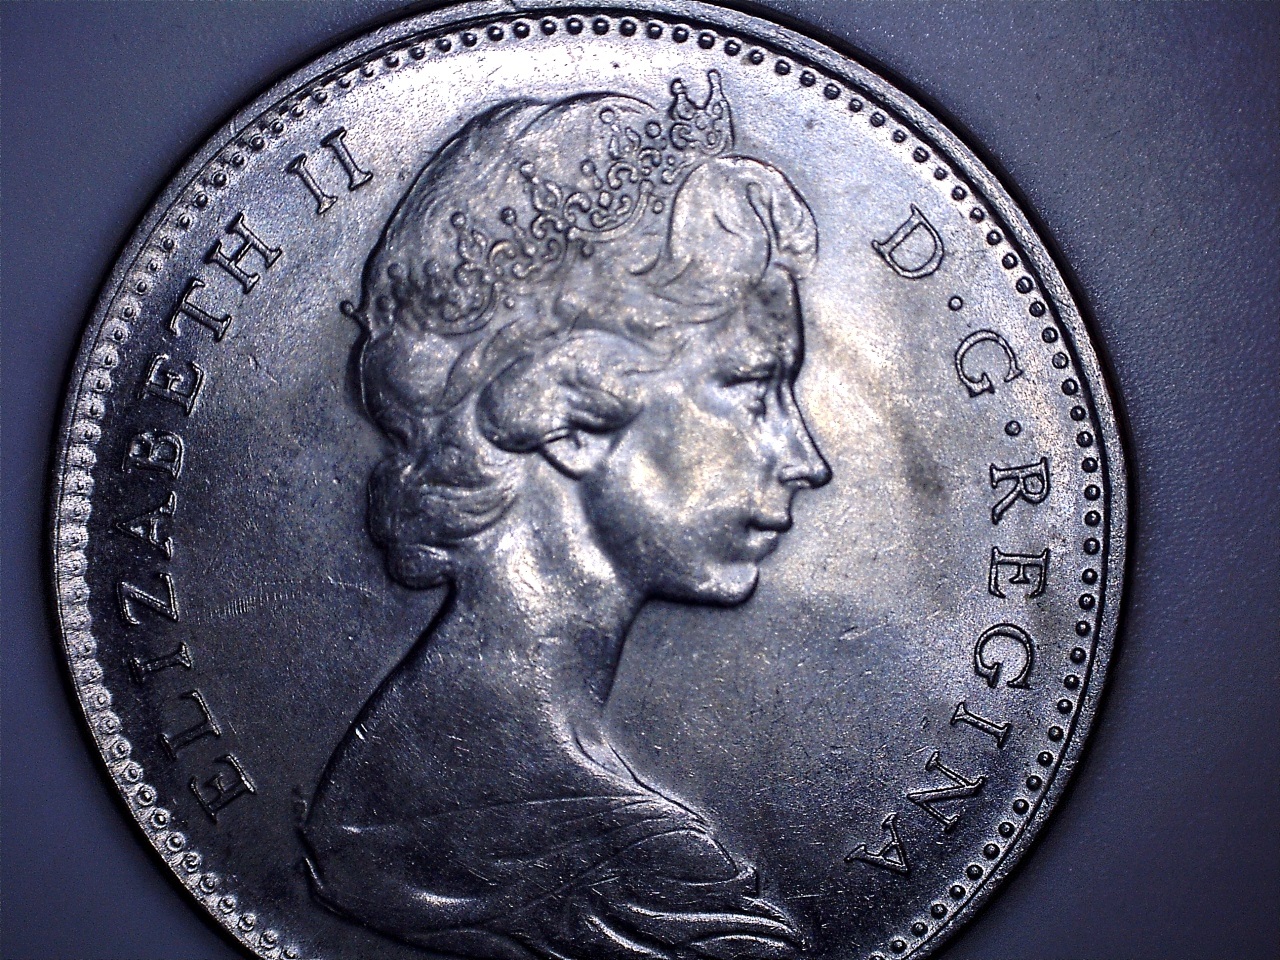 1971 5 cents c.jpg